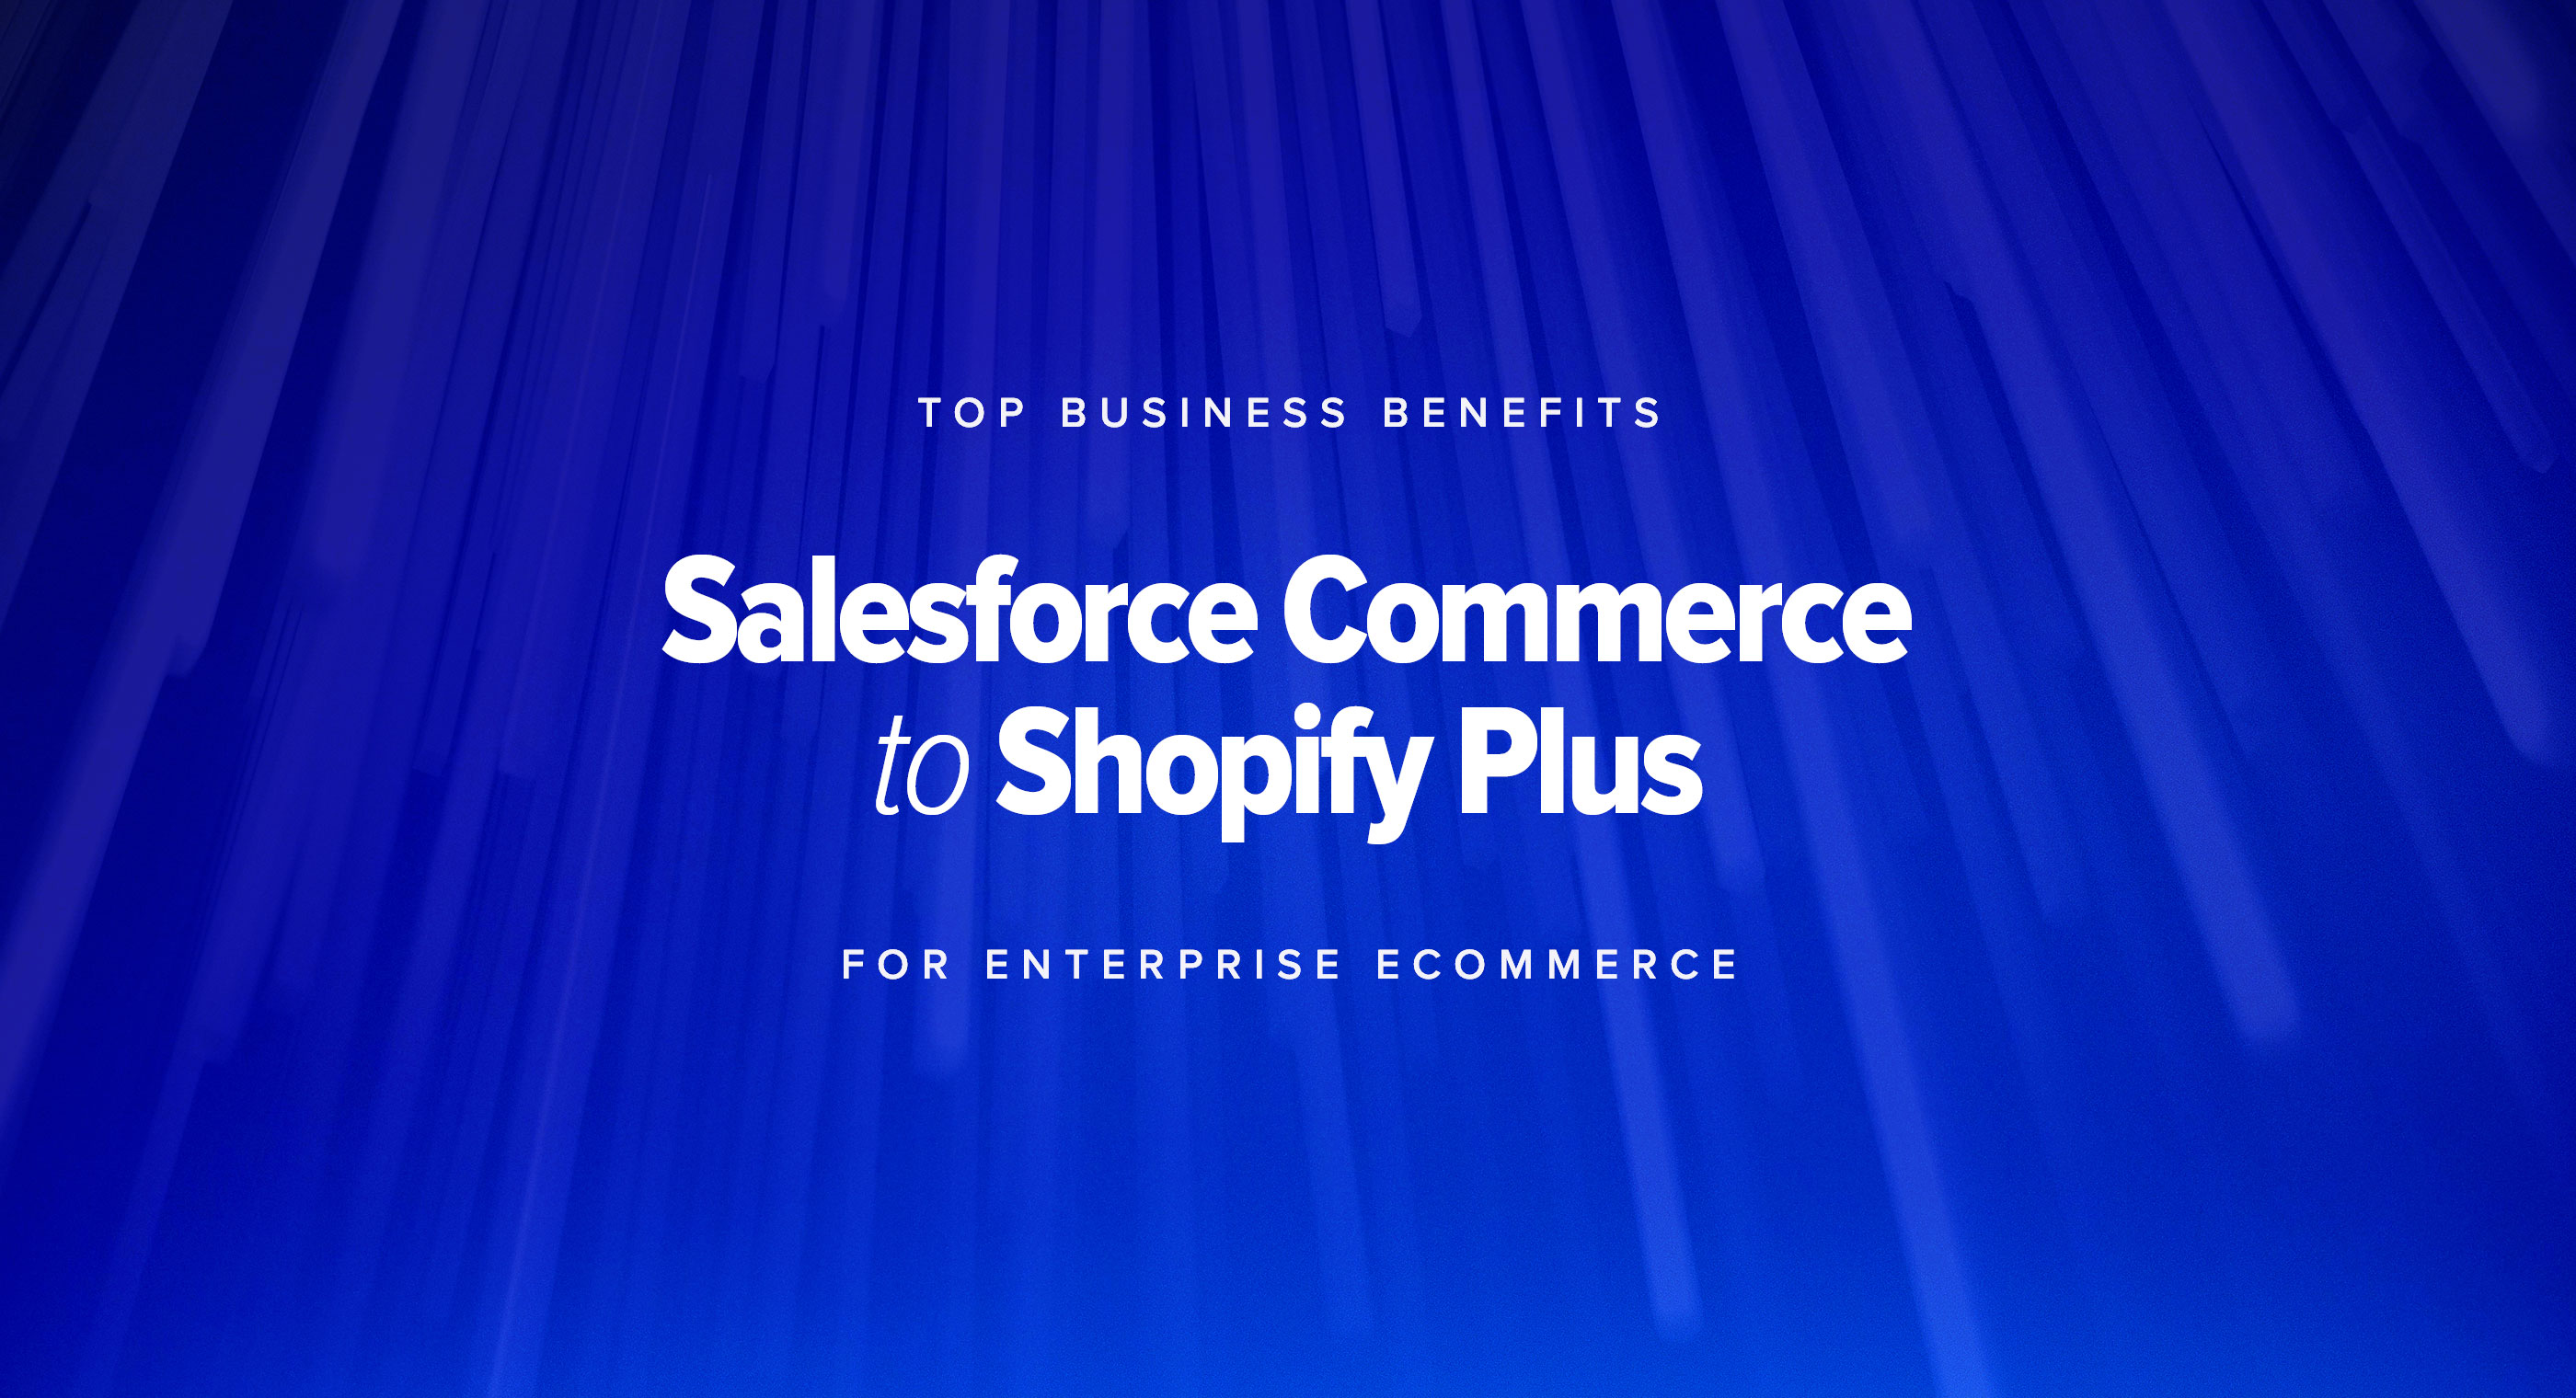 SFCC to Shopify Plus